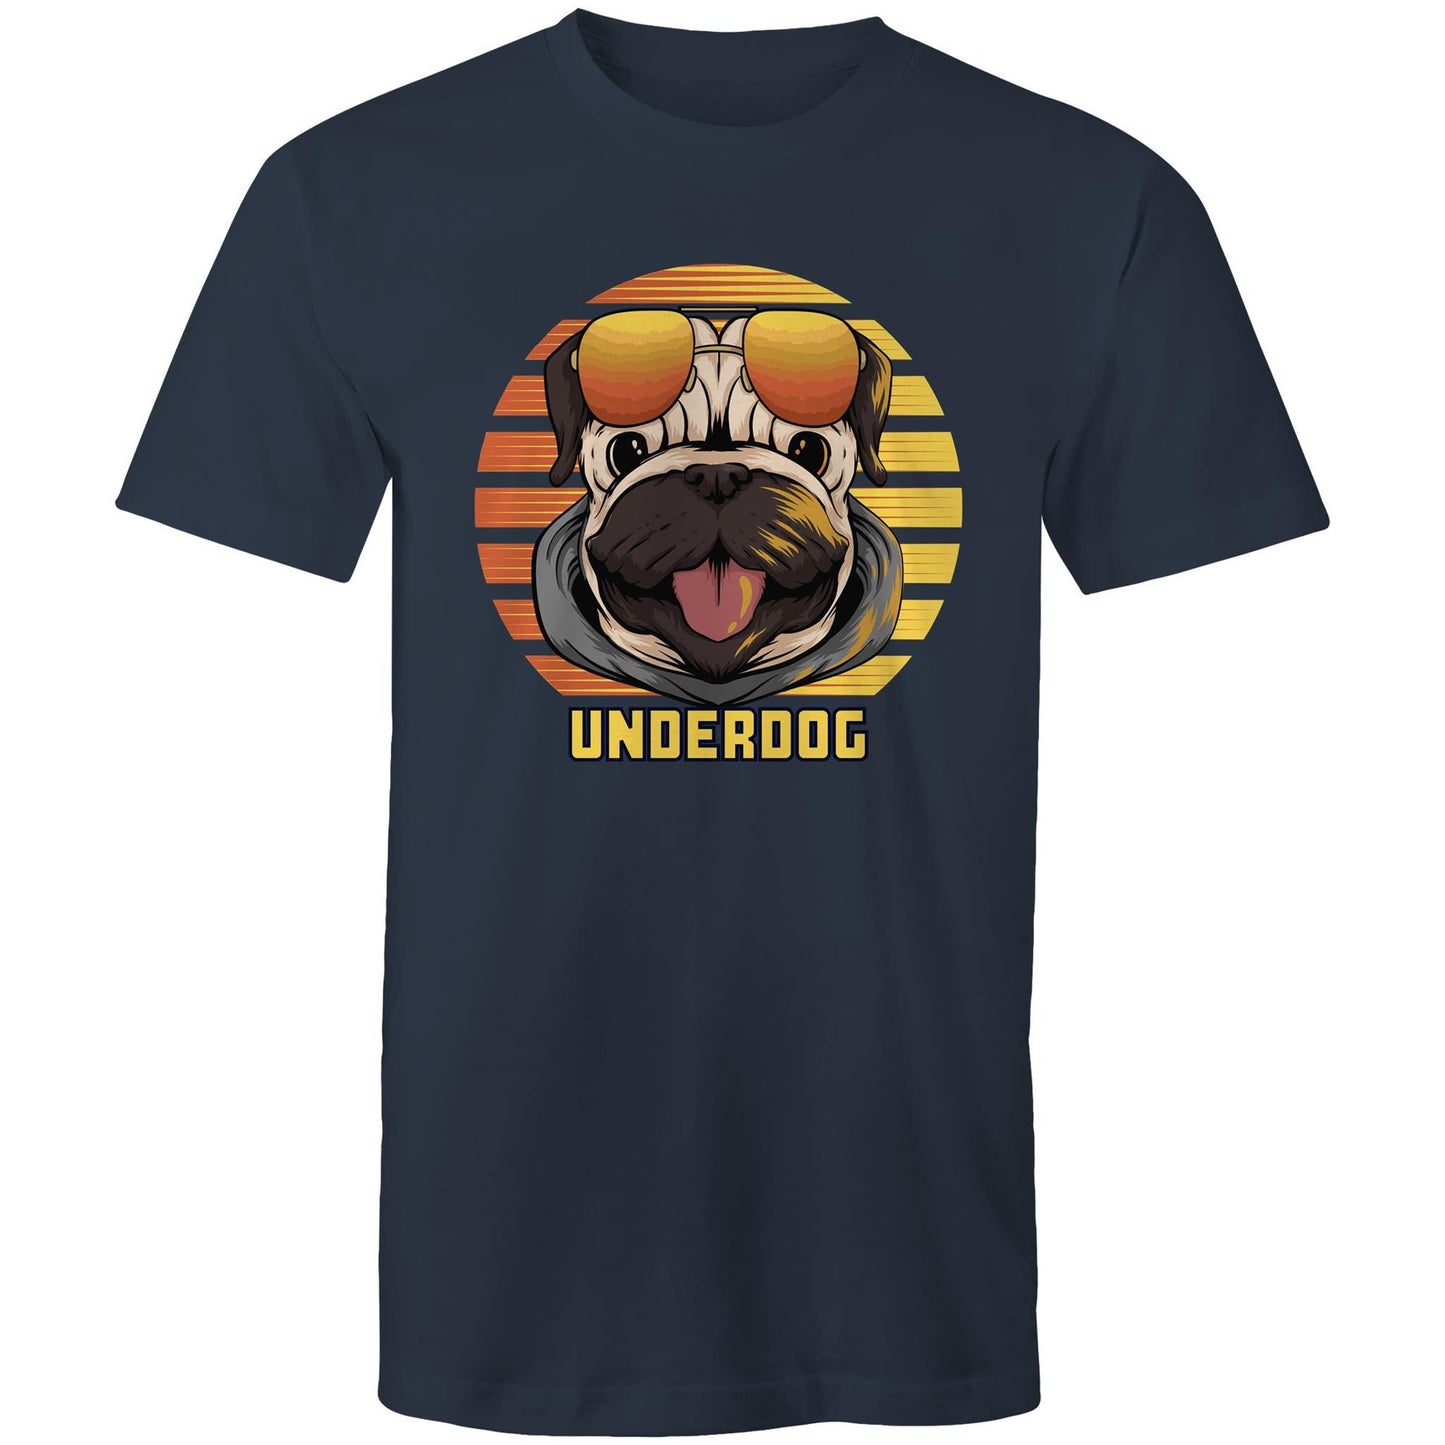 Underdog - Mens T-Shirt Navy Mens T-shirt animal